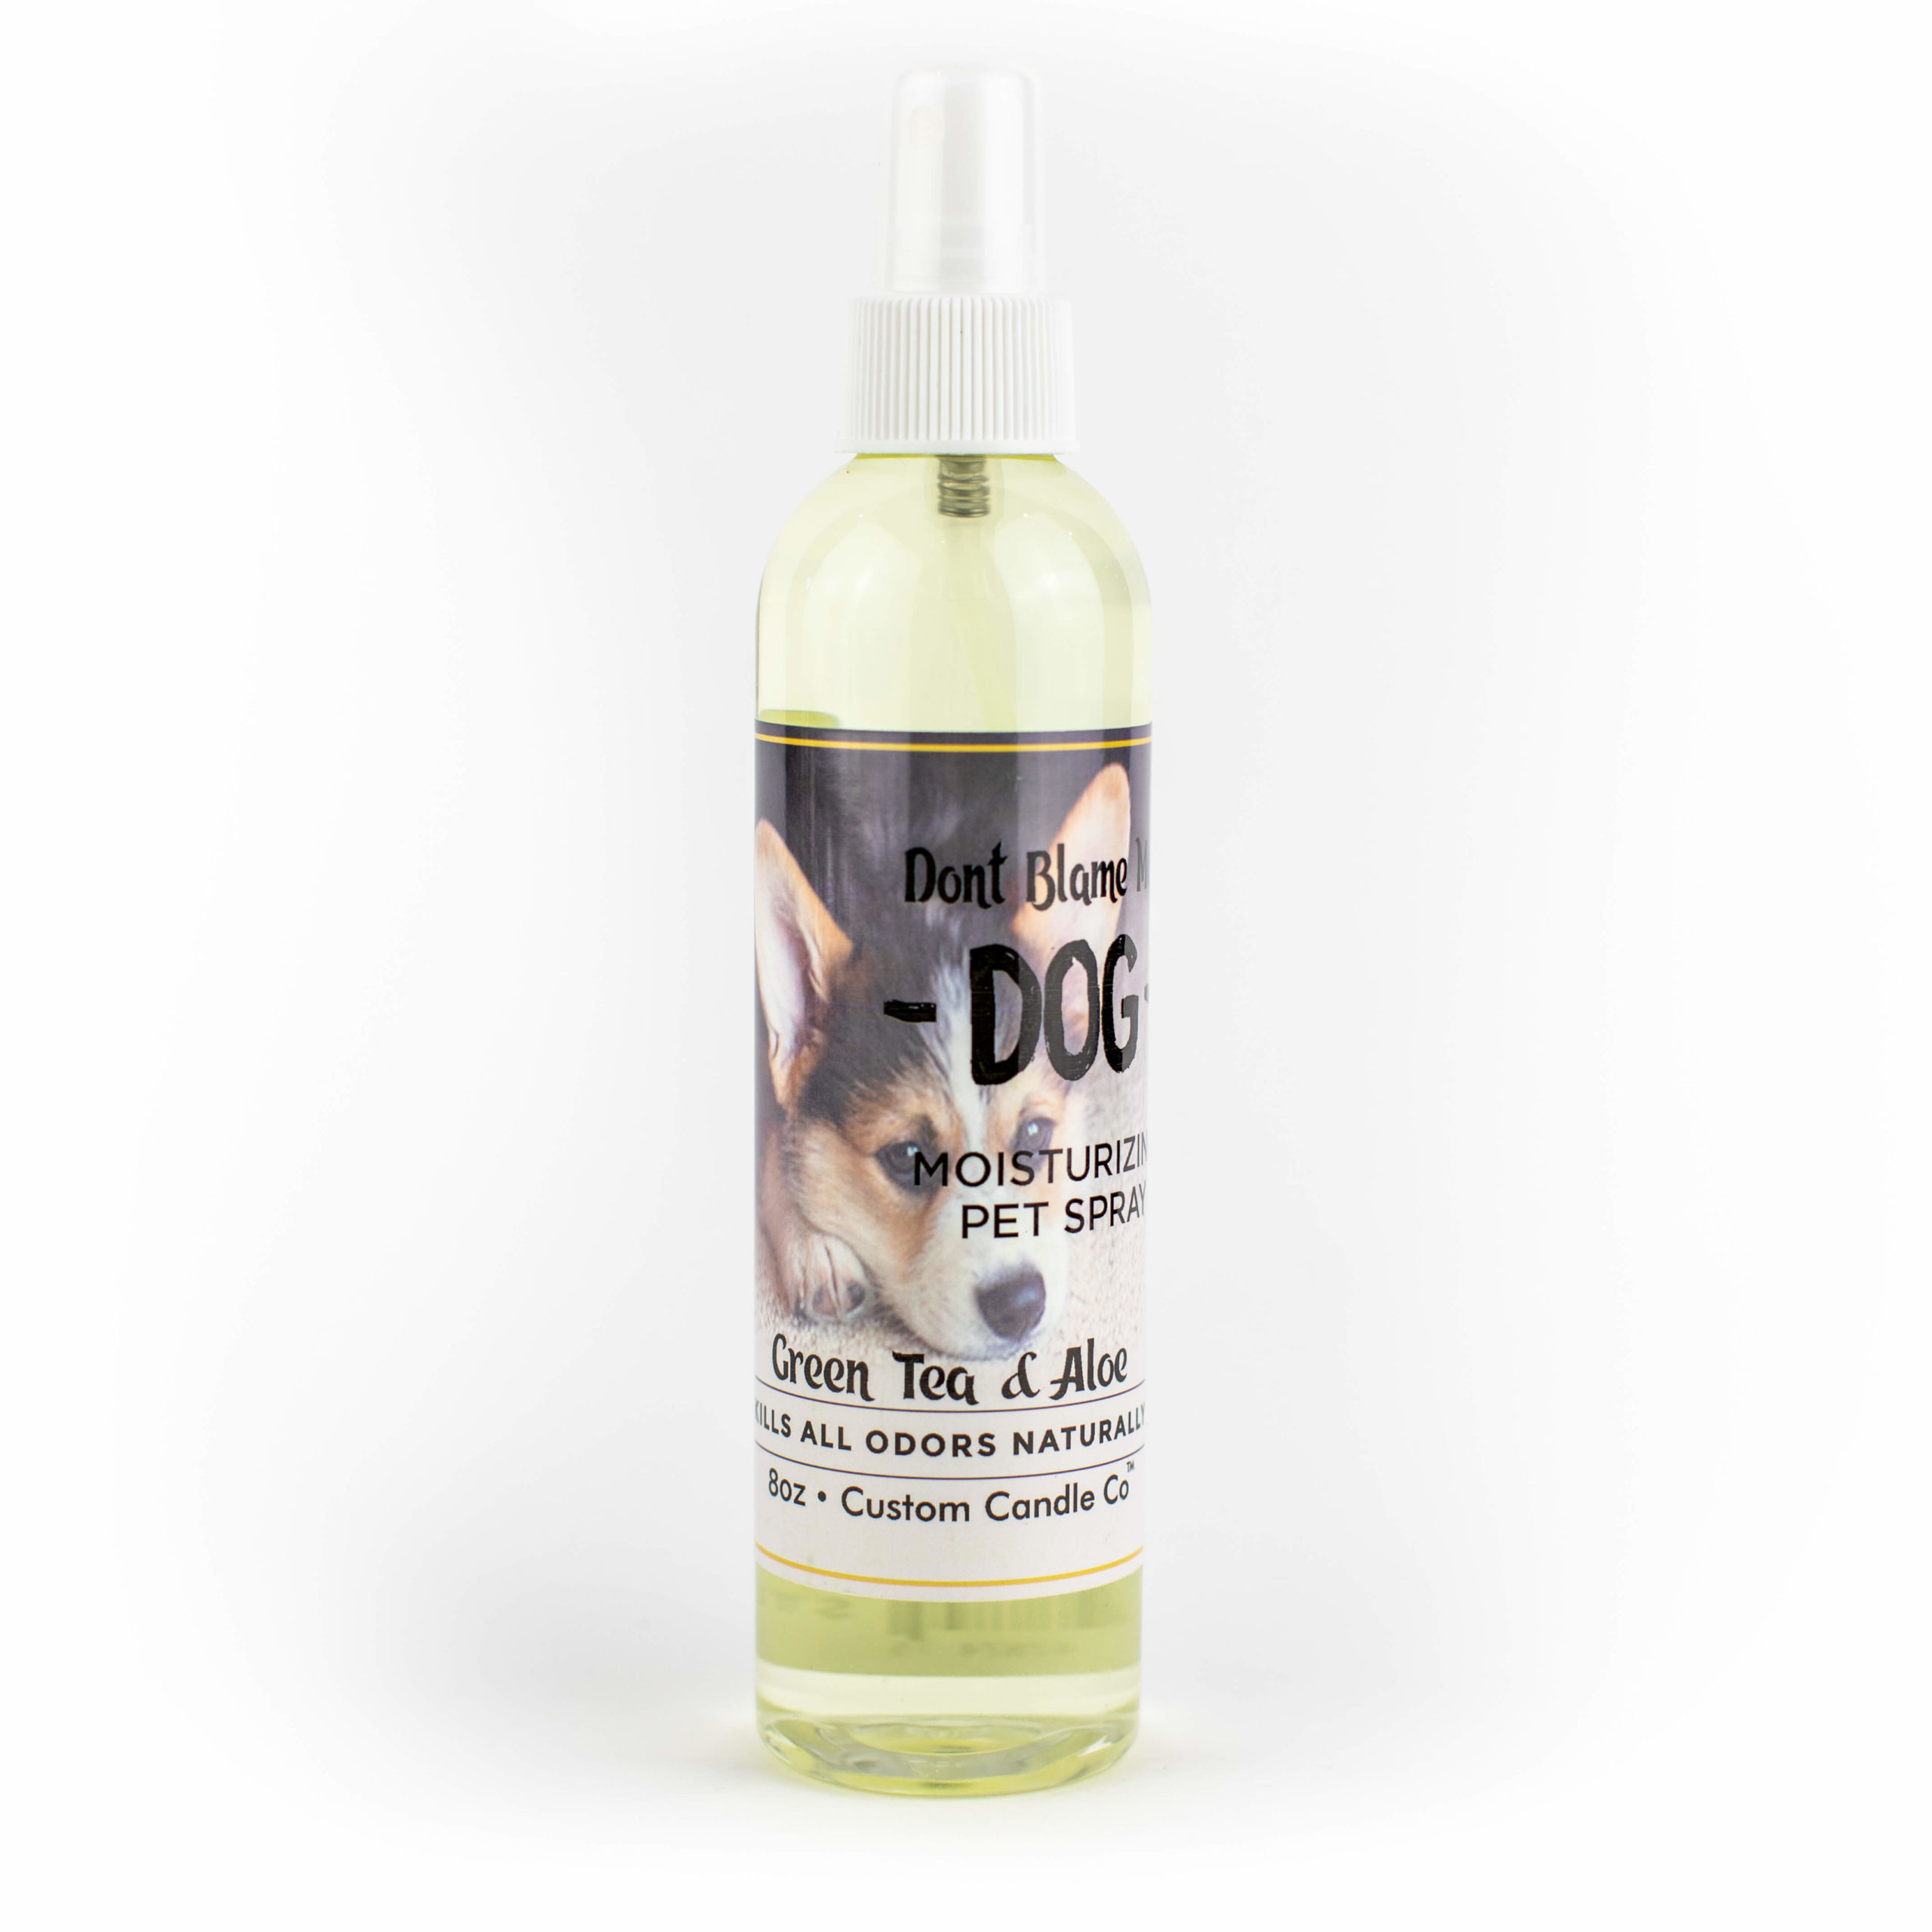 A bottle of Dog Shampoo - Green Tea Aloe 8-oz on a white background.